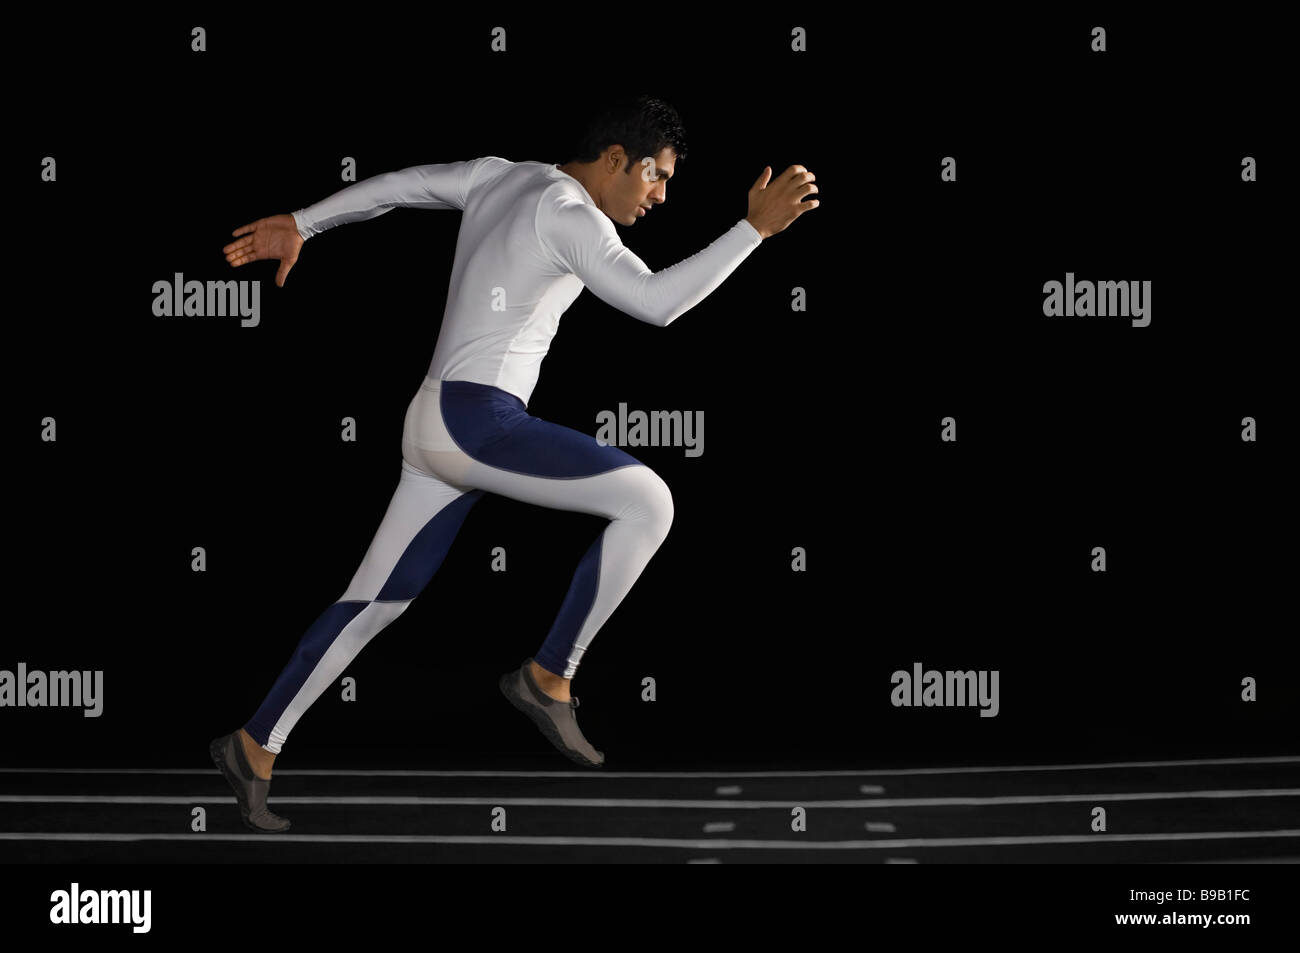 Male athlete running on track Stock Photo